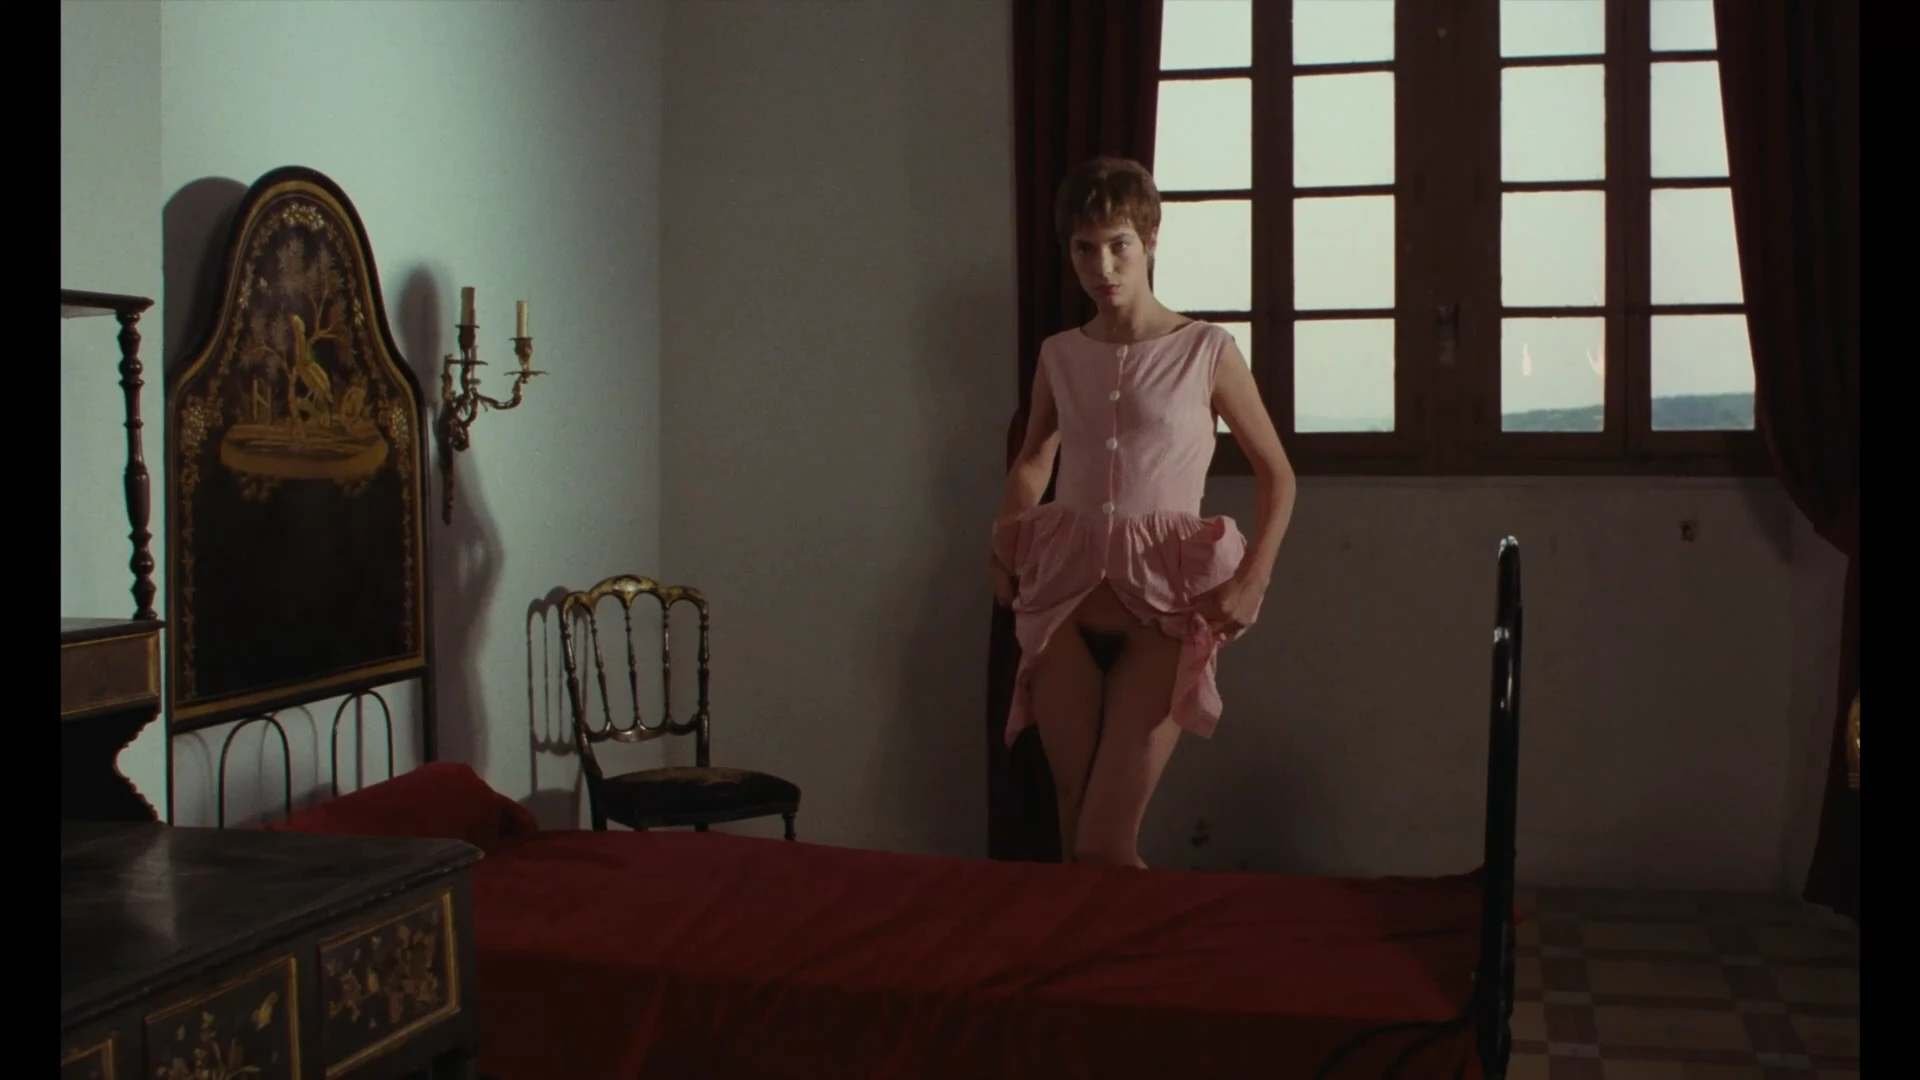 Jane Birkin undressing to do some hard sex after